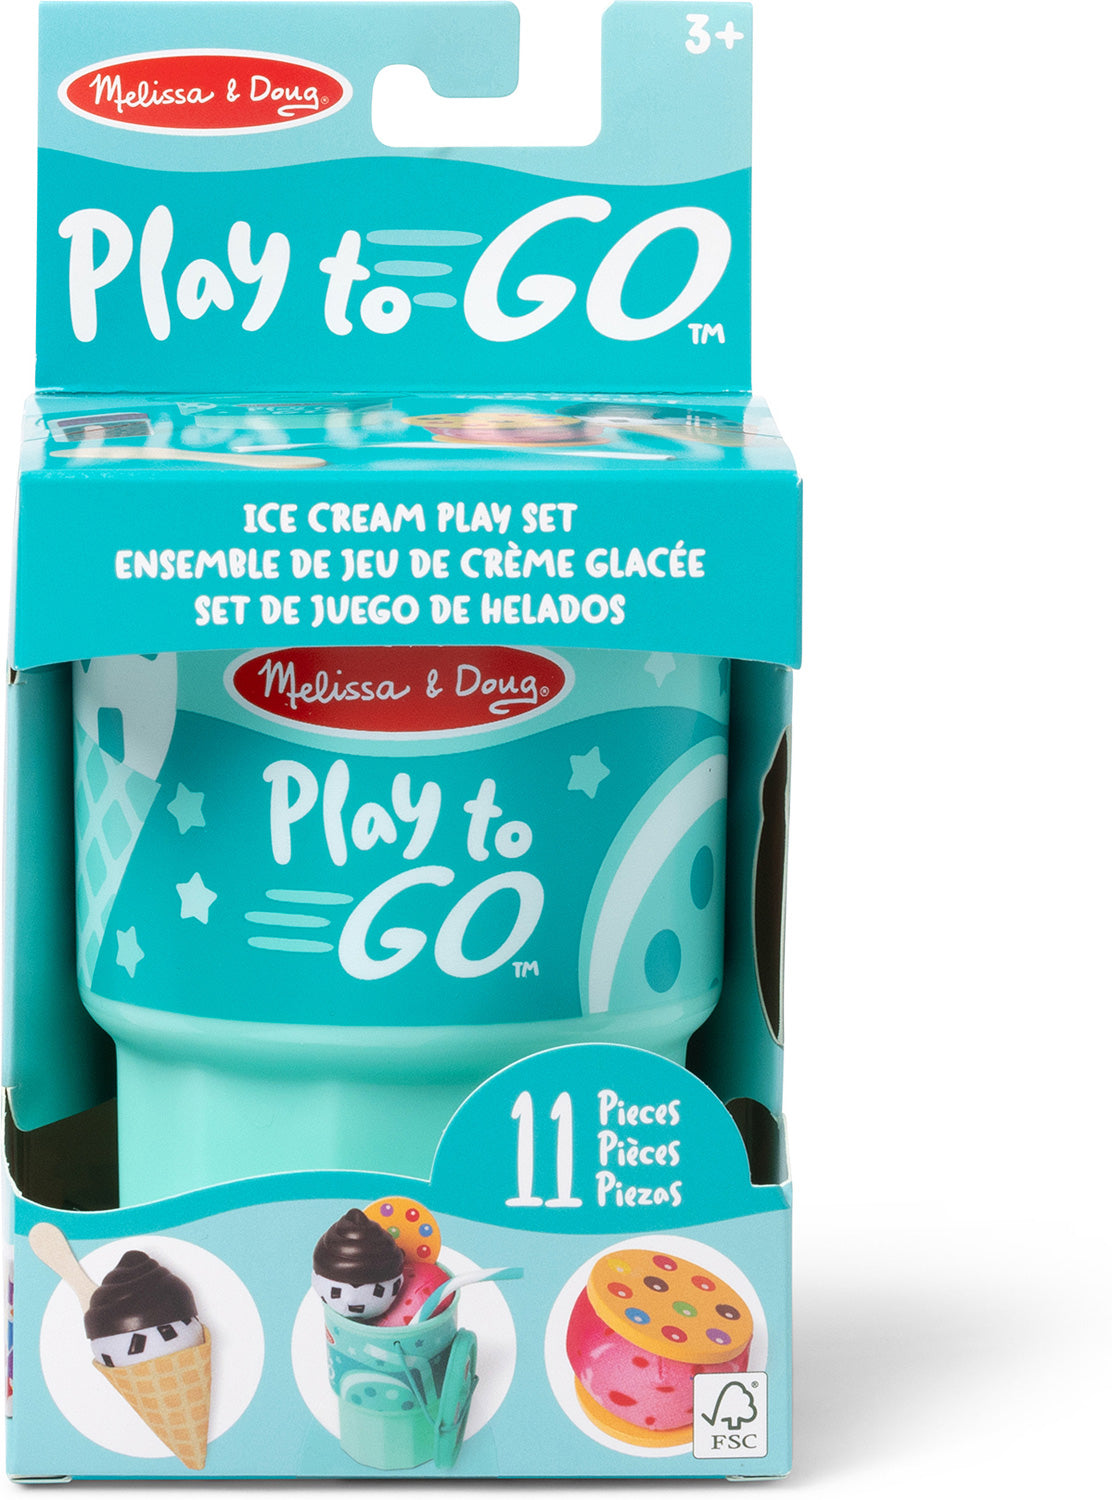 Play to Go Ice Cream Play Set